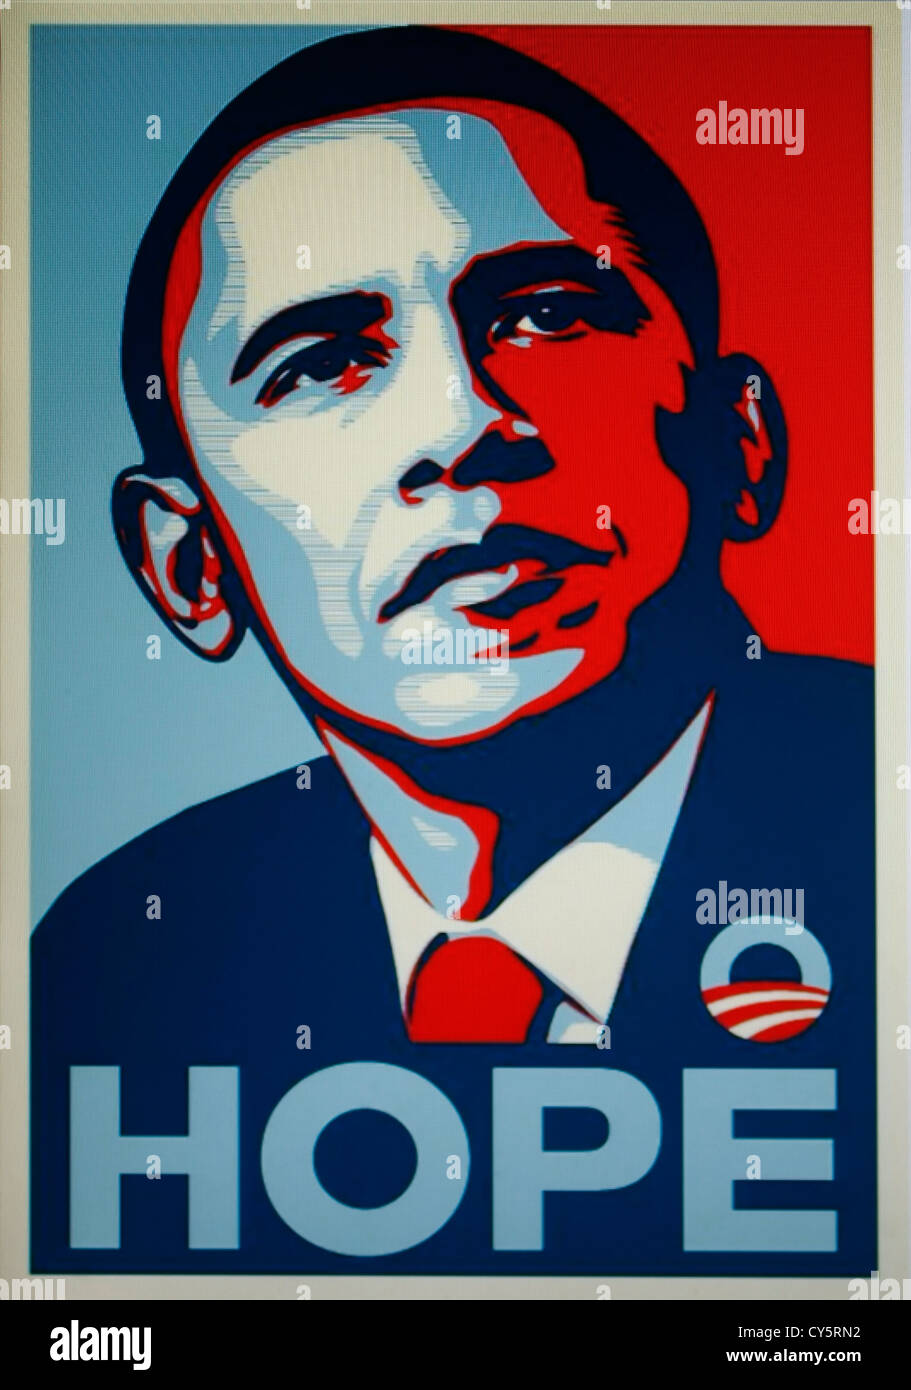 Barack Obama 'Hoffnung' Plakat (Shepard Fairey Siebdruck) Stockfoto